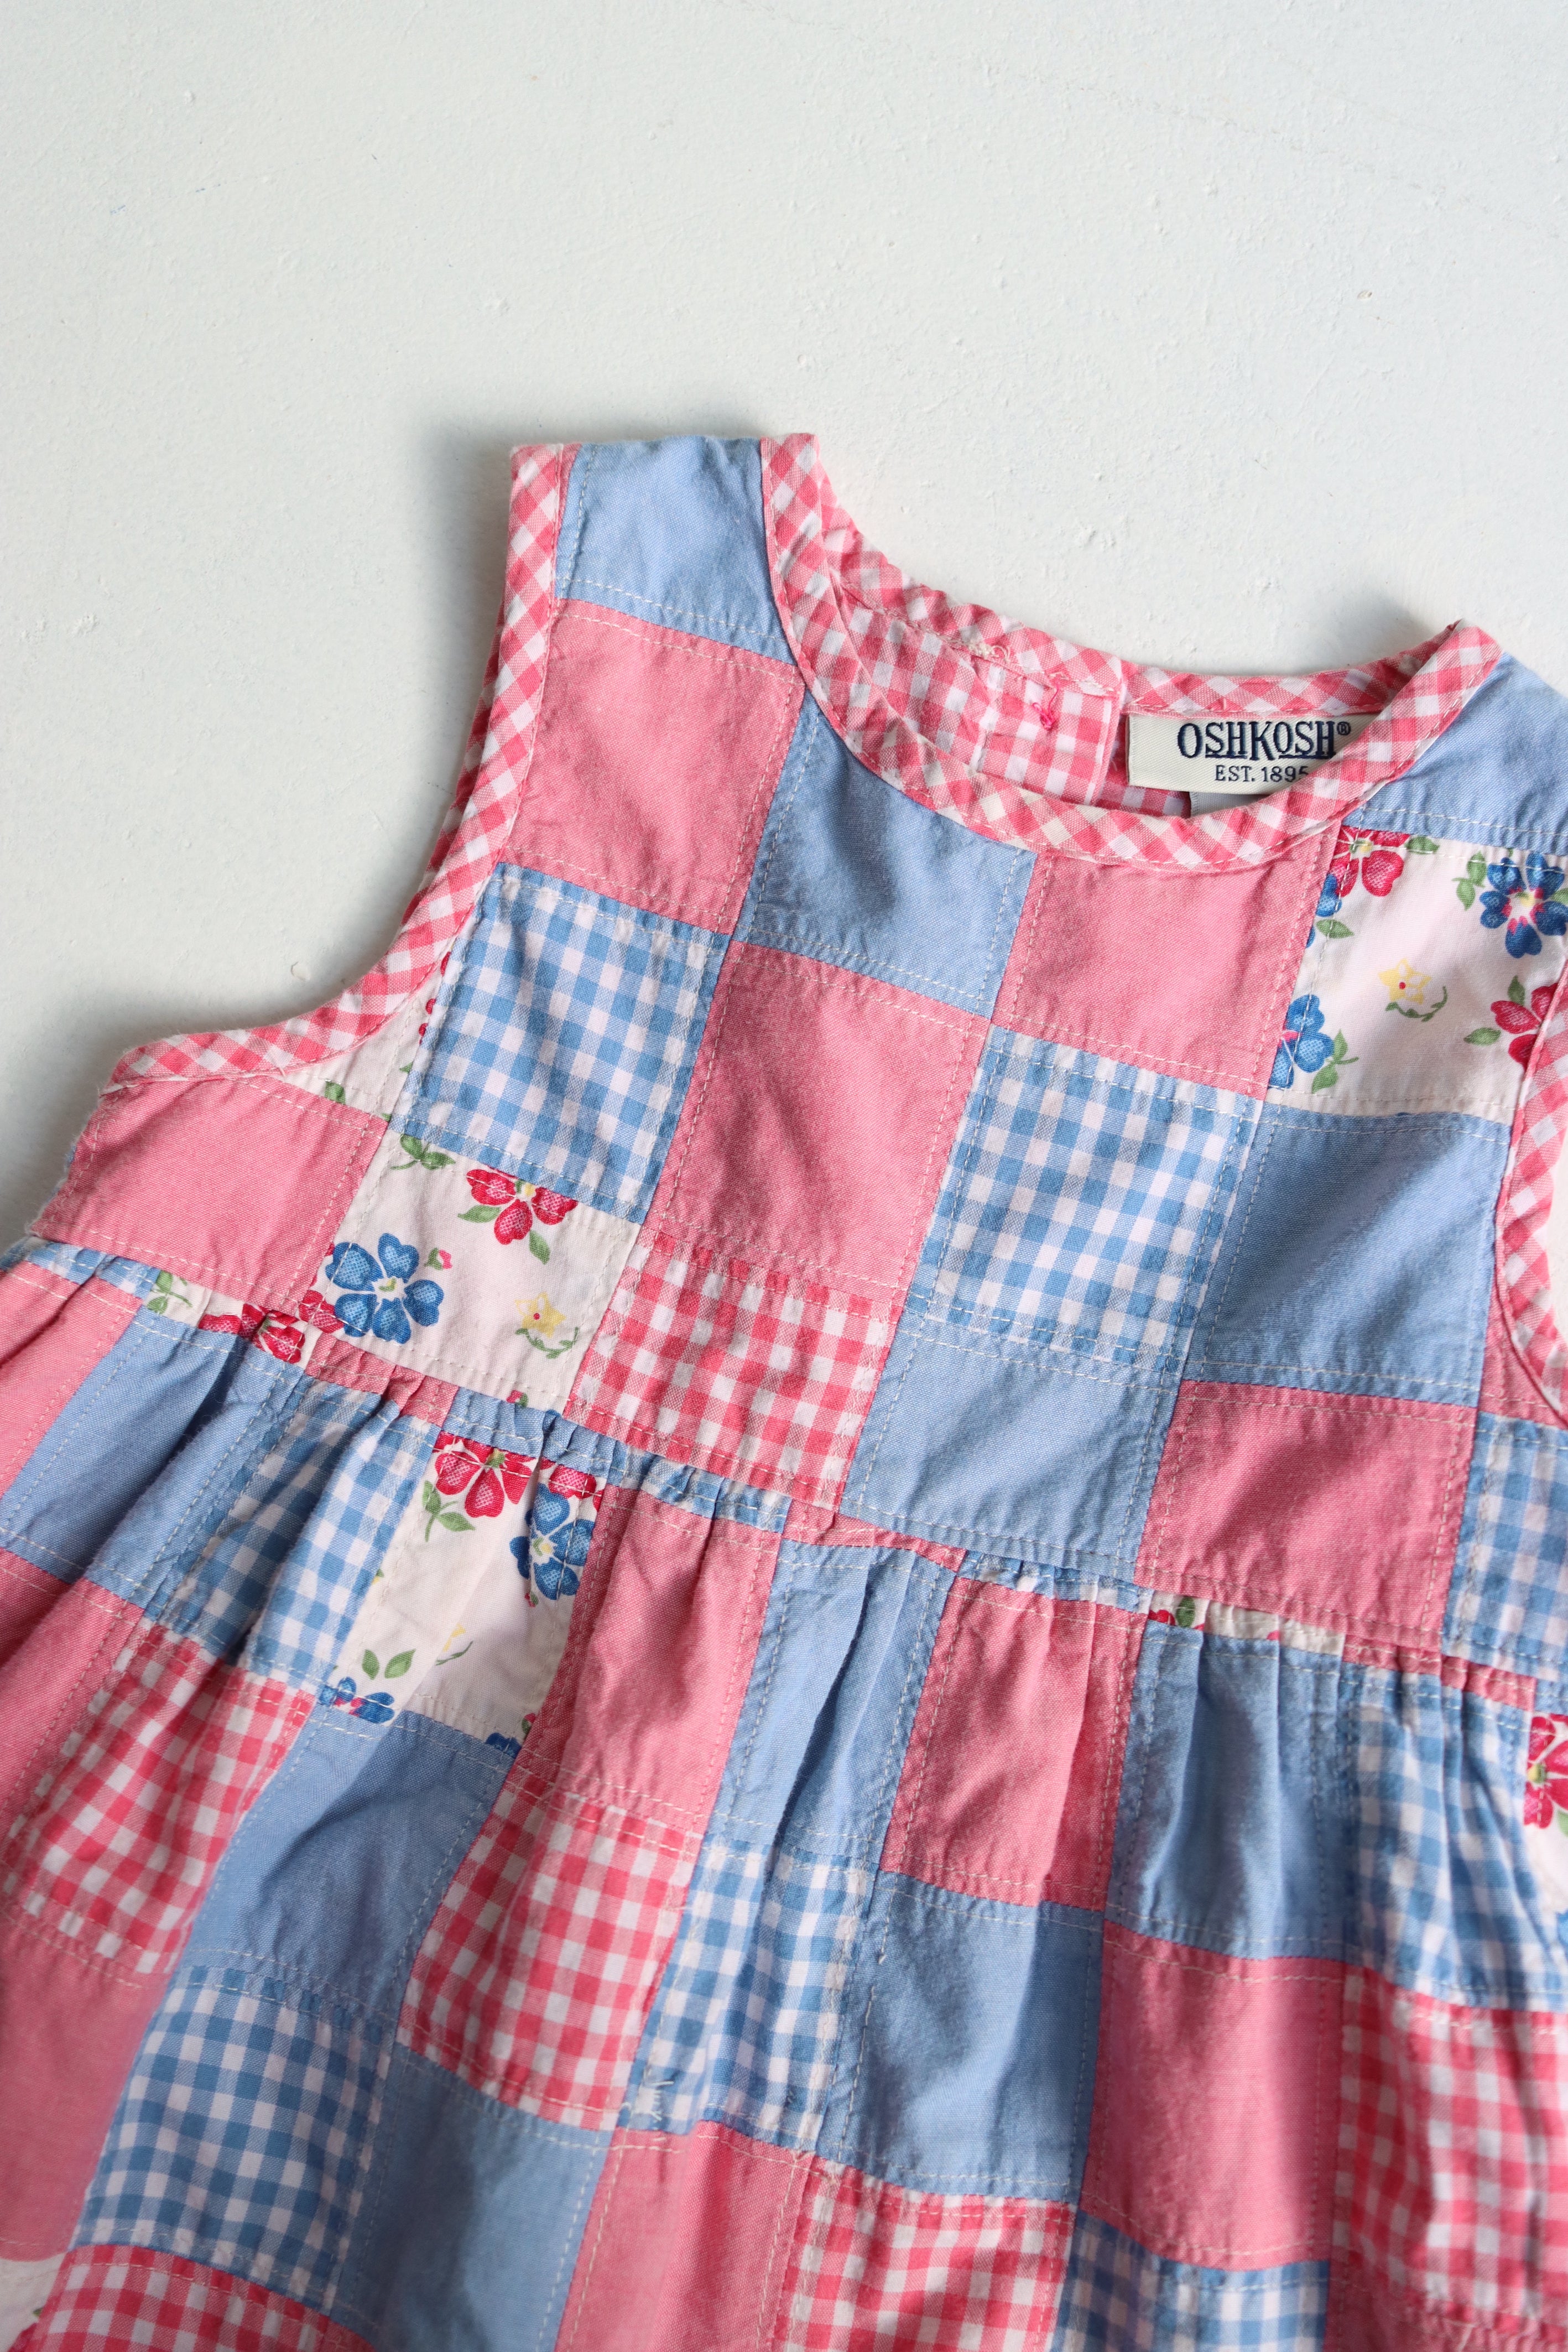 Vintage OshKosh patchwork dress - size 24 months